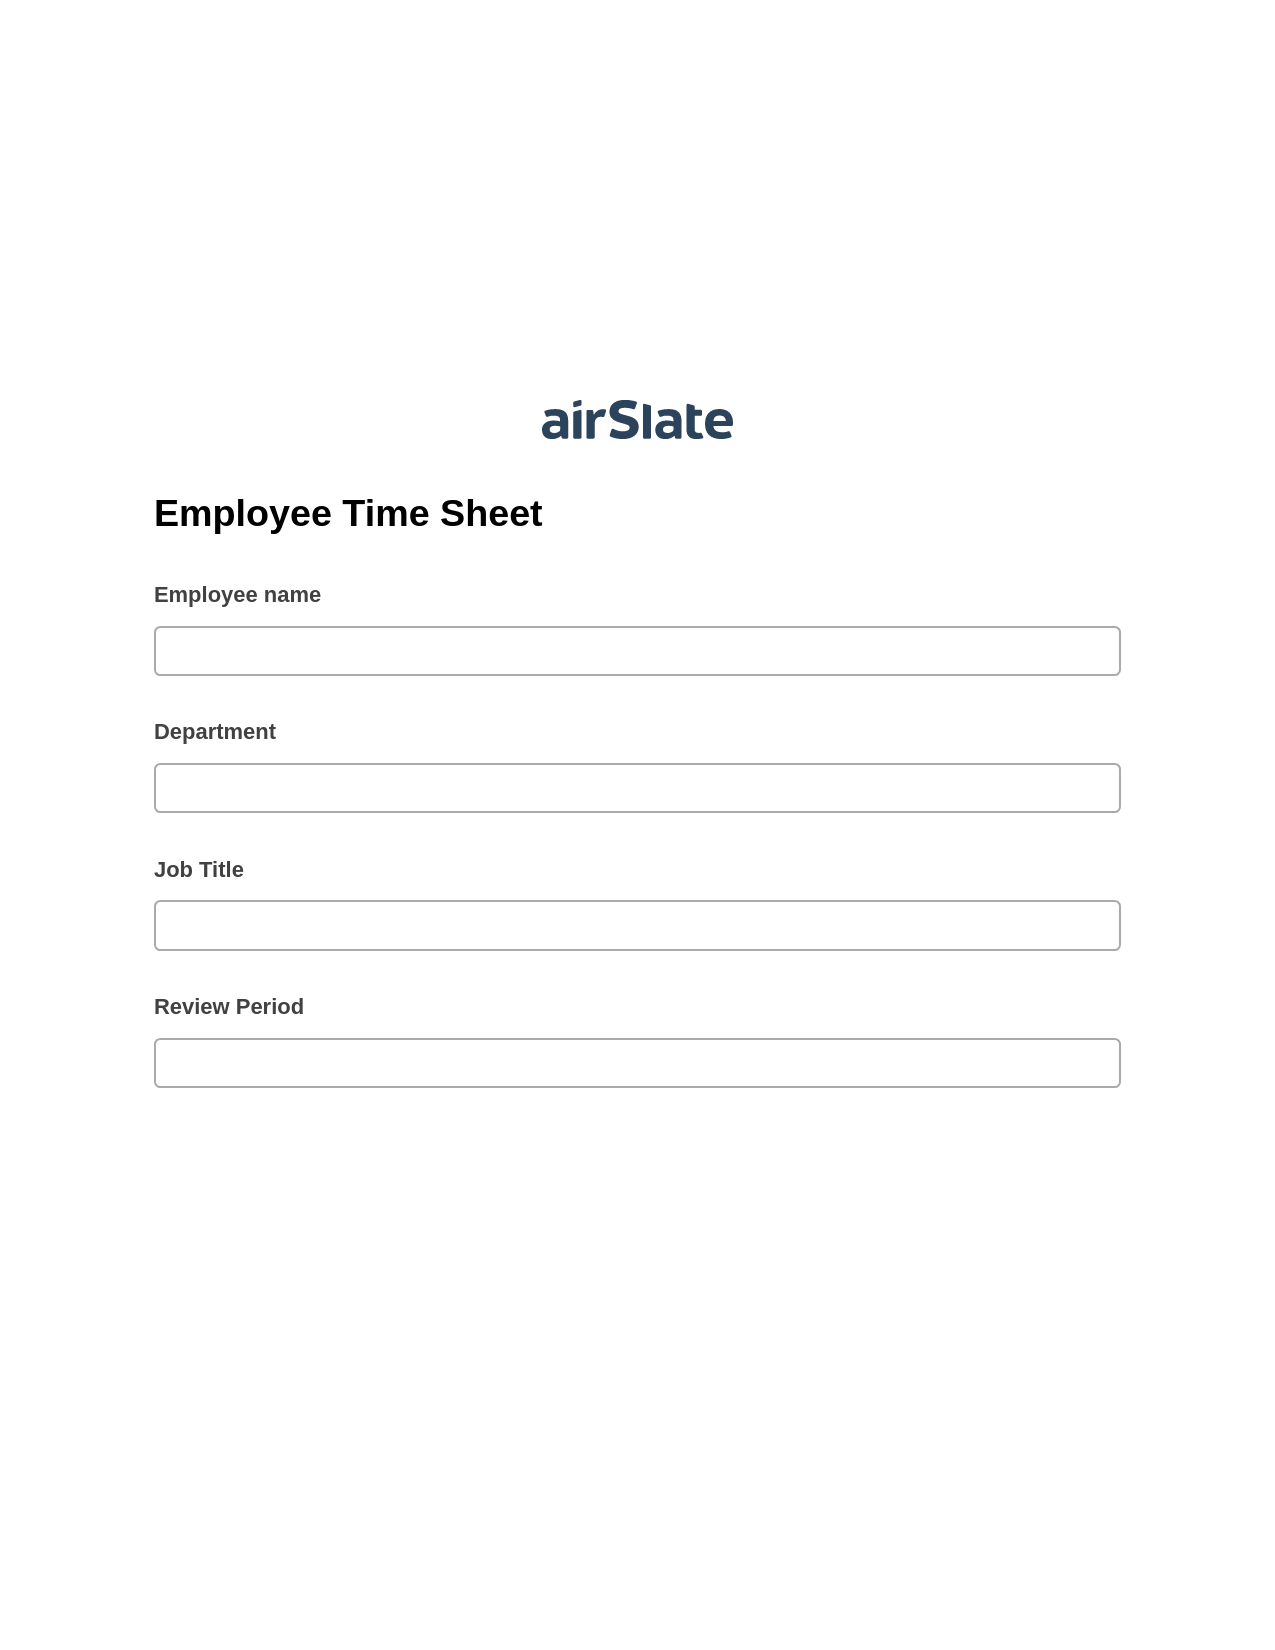 Multirole Employee Time Sheet Pre-fill from another Slate Bot, Revoke Access Bot, Slack Two-Way Binding Bot